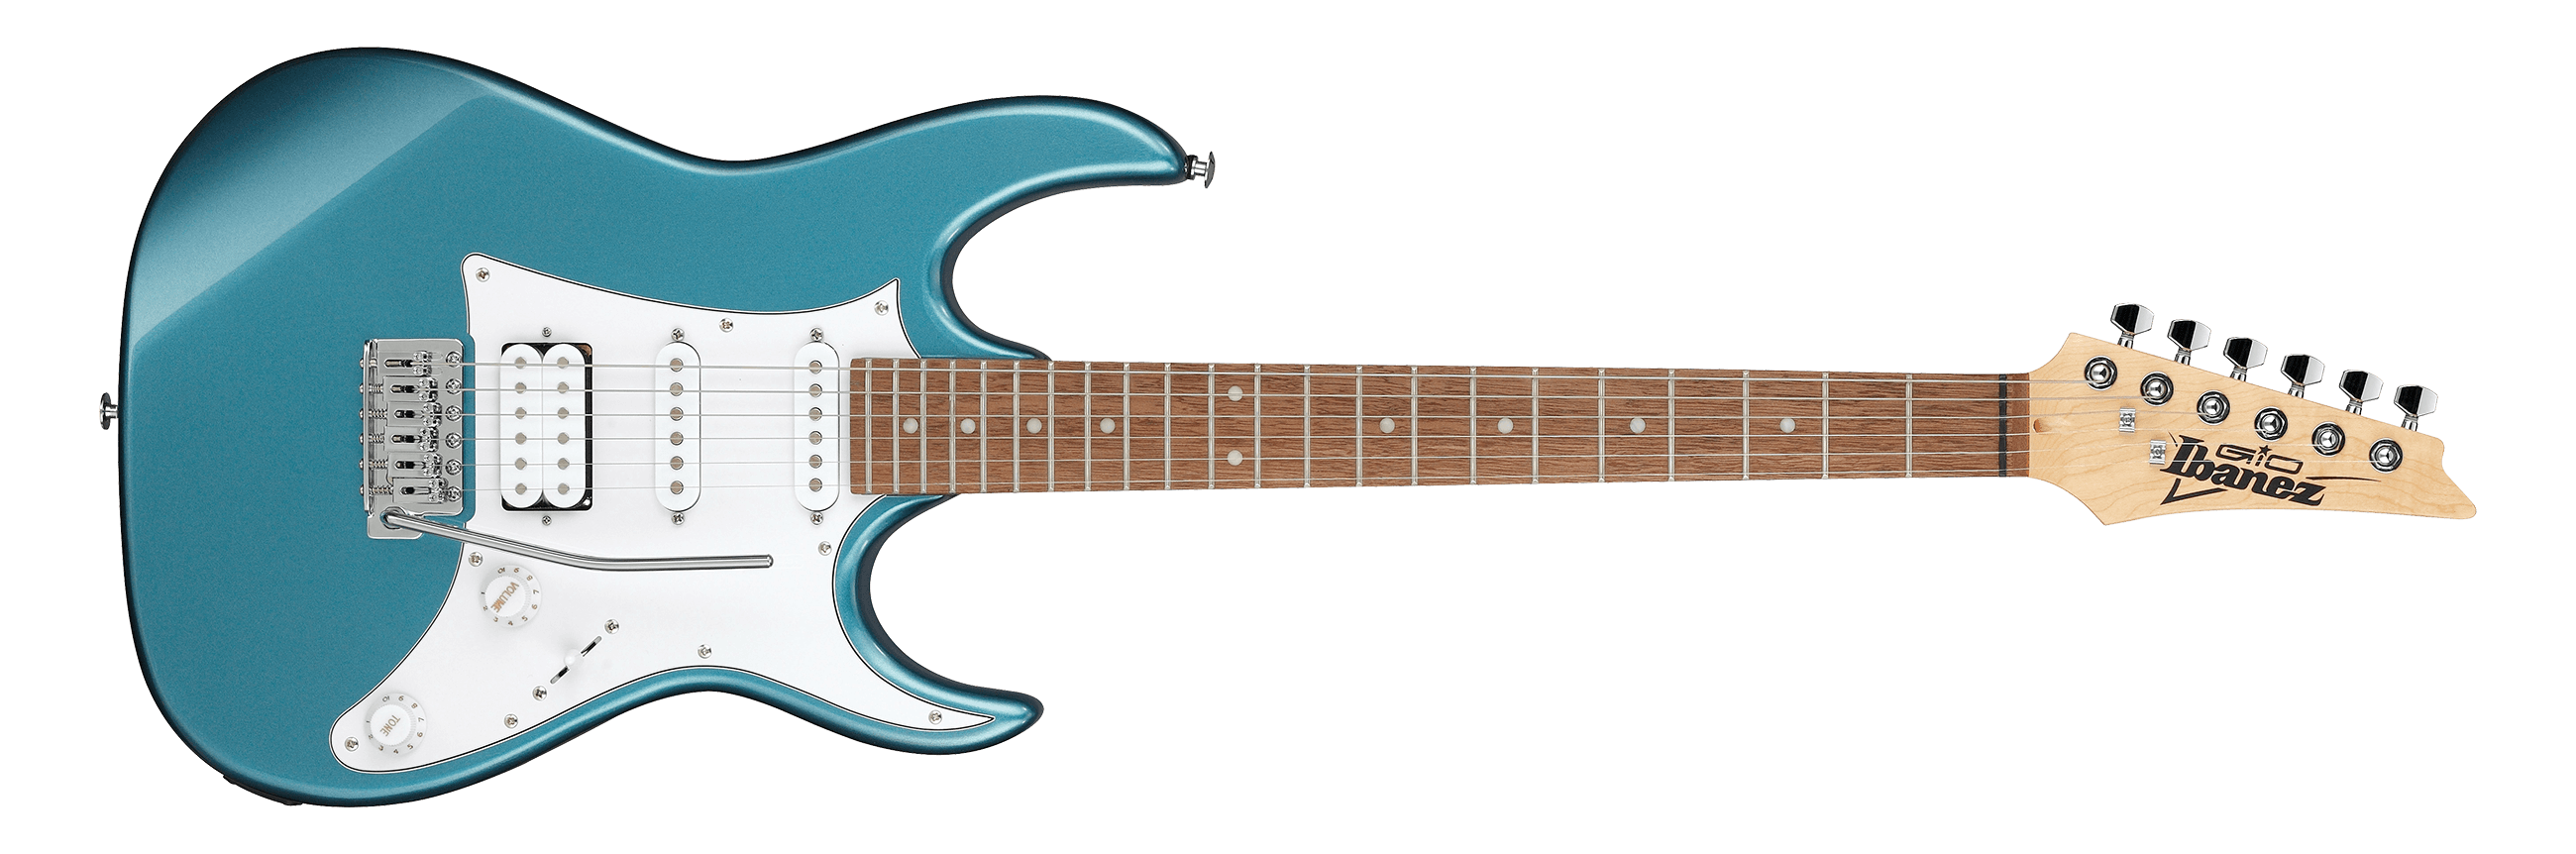 Ibañez - Guitarra Eléctrica "Gio Rg" Azul Claro Metalico Mod.GRX40-MLB_12